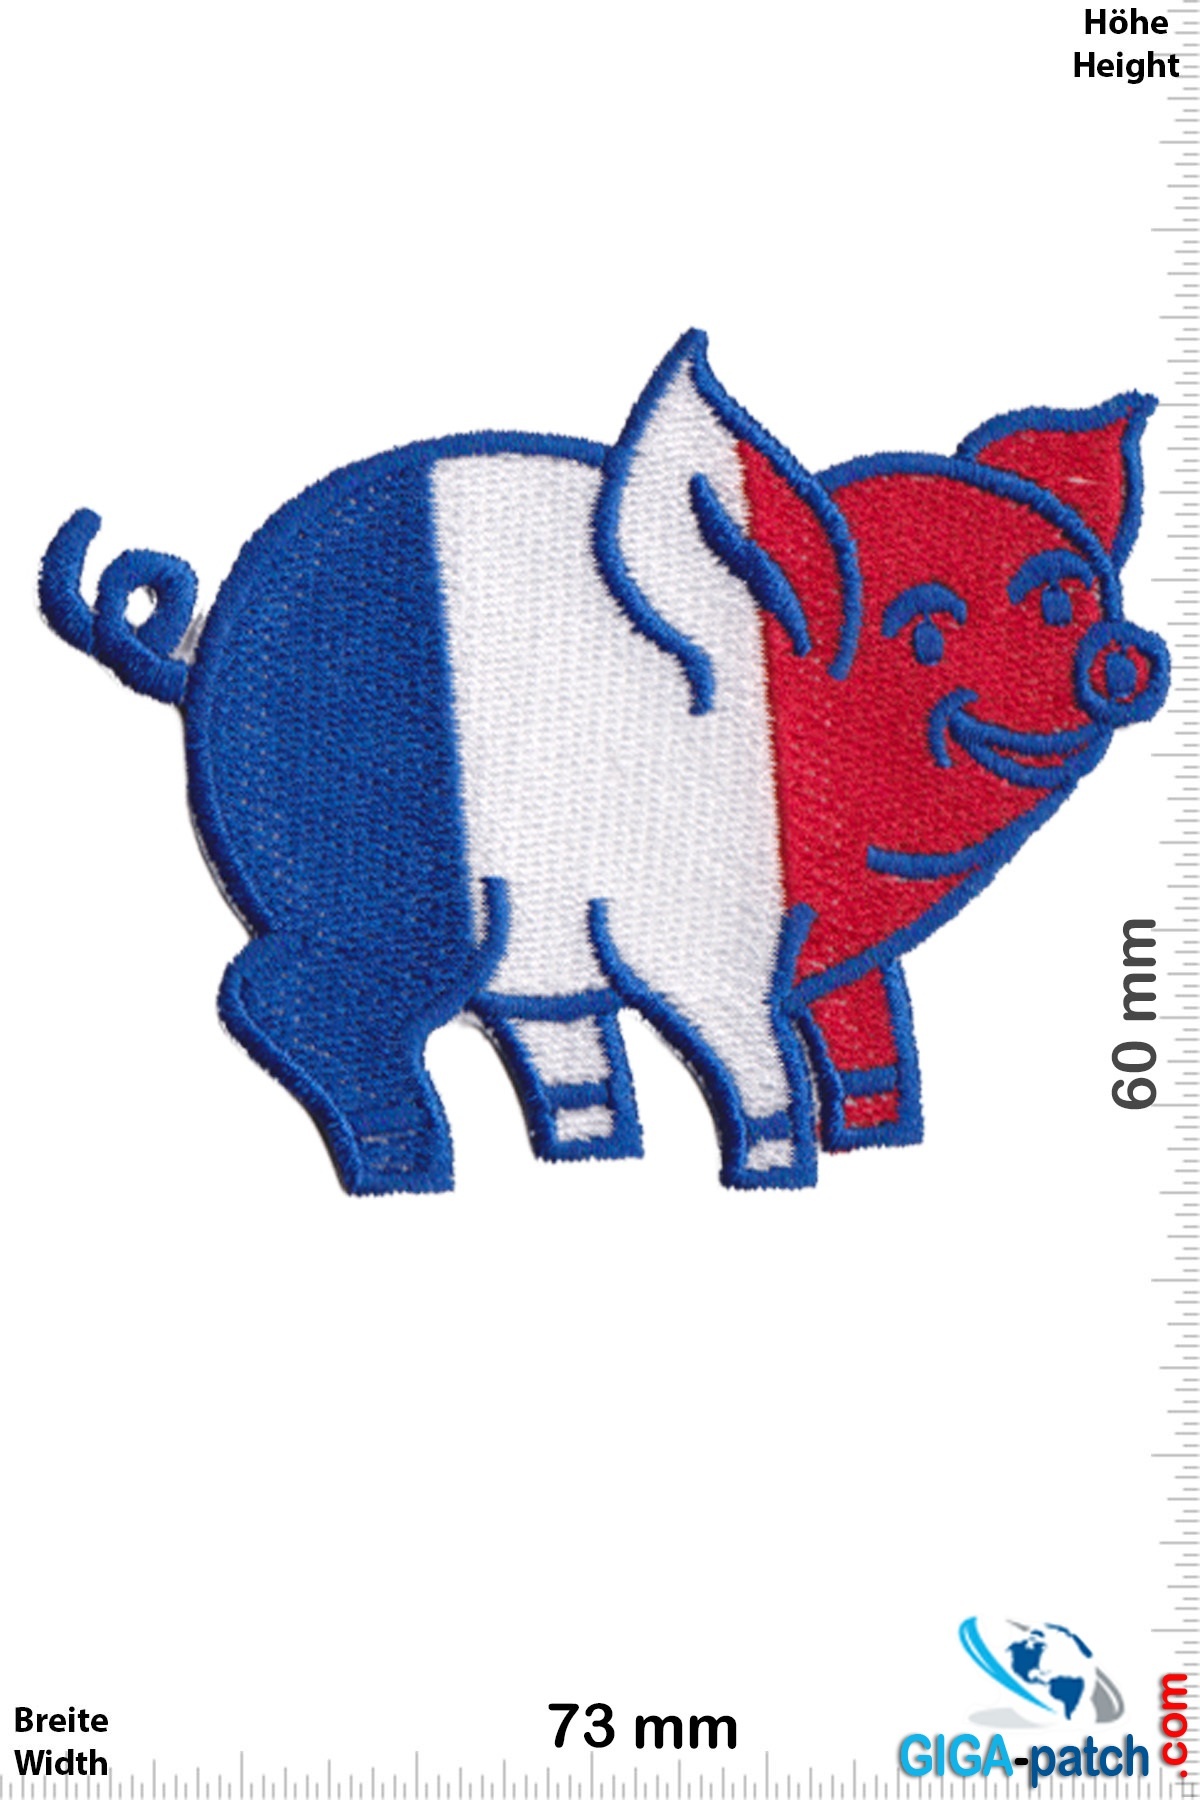 Frankreich, France France - piggy - flag